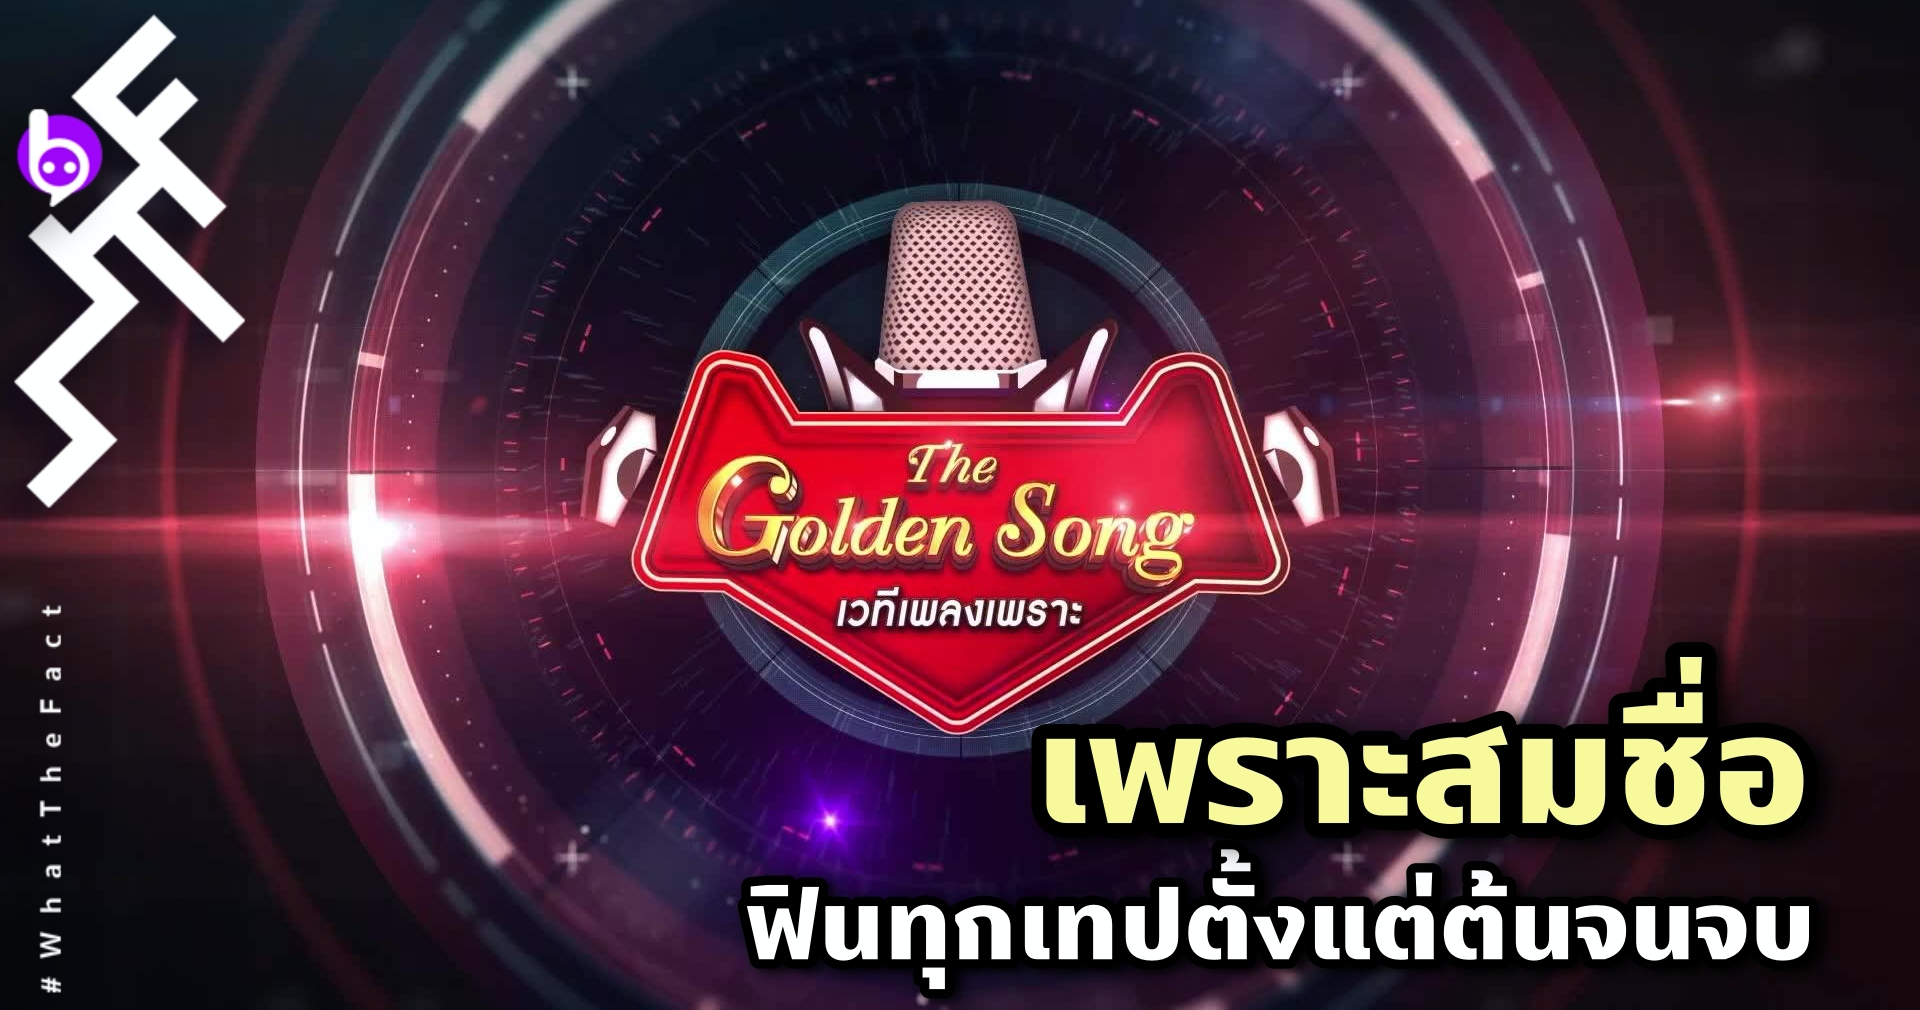 The Golden Song เวทีเพลงเพราะ : รายการประกวดร้องเพลงที่ เพราะสมชื่อ ฟินทุกเทปตั้งแต่ต้นจนจบ